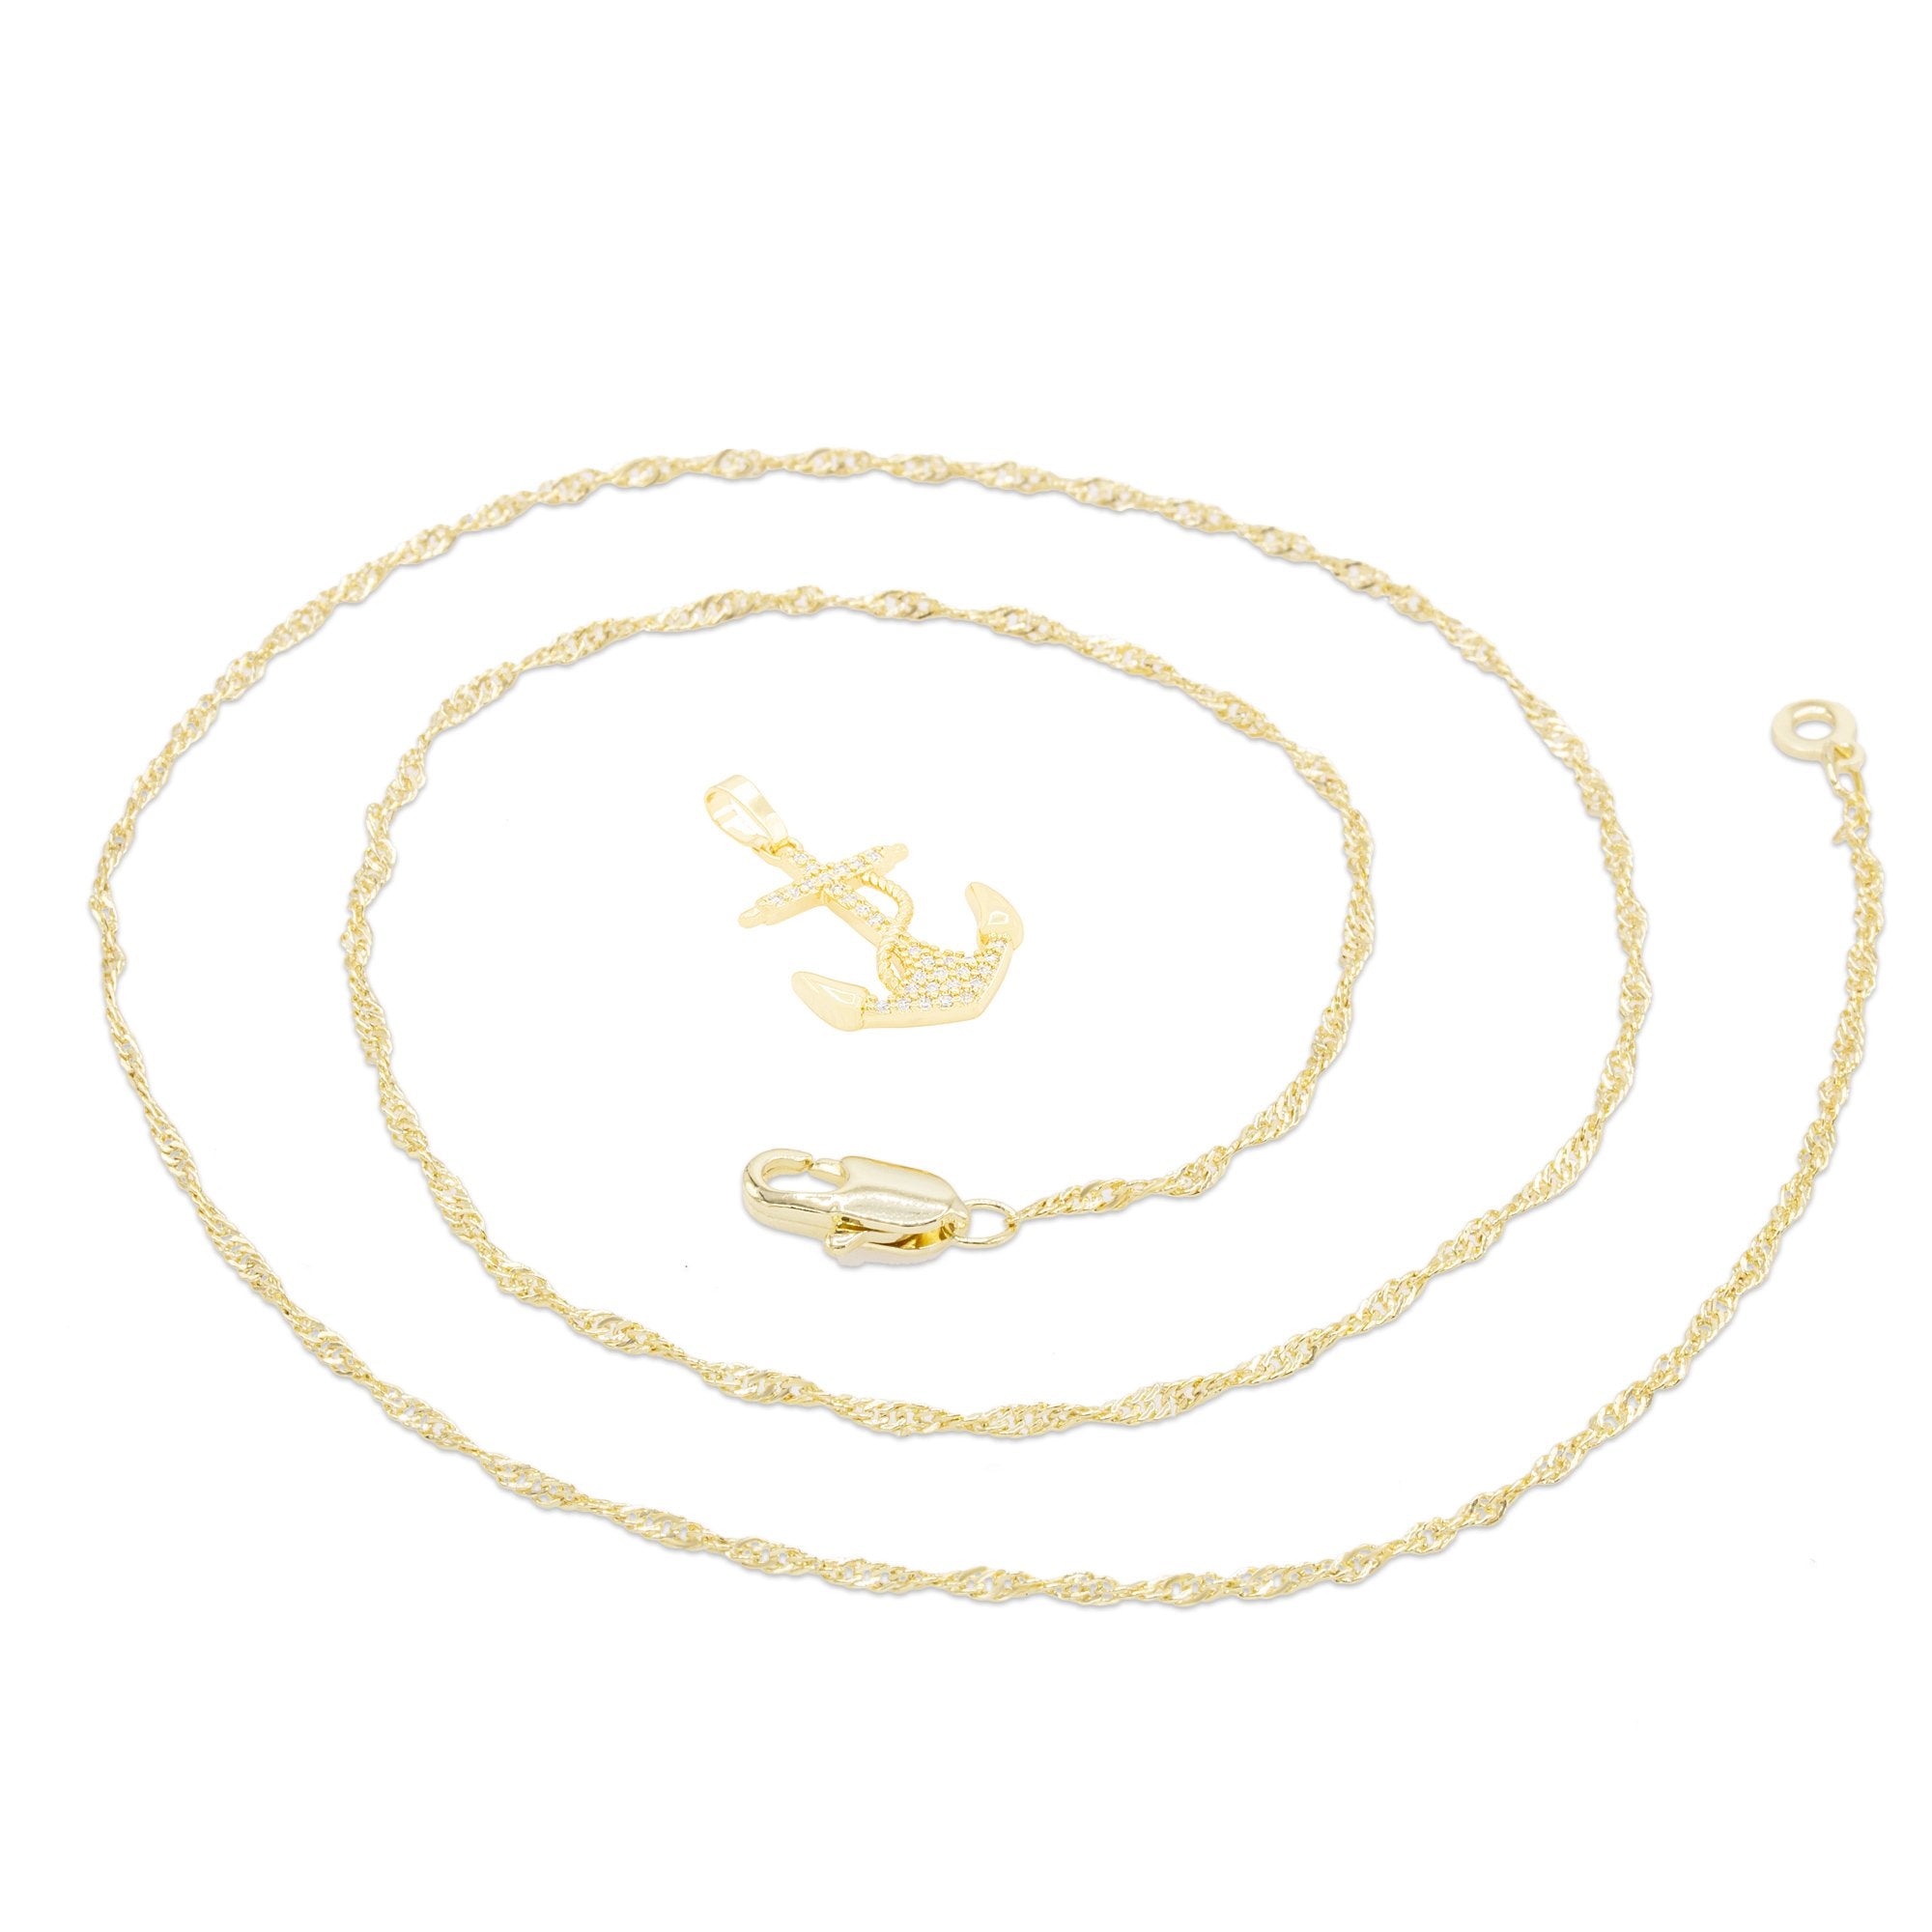 Cubic Zirconia Devil Anchor Pendant 14K Gold Filled Necklace Set